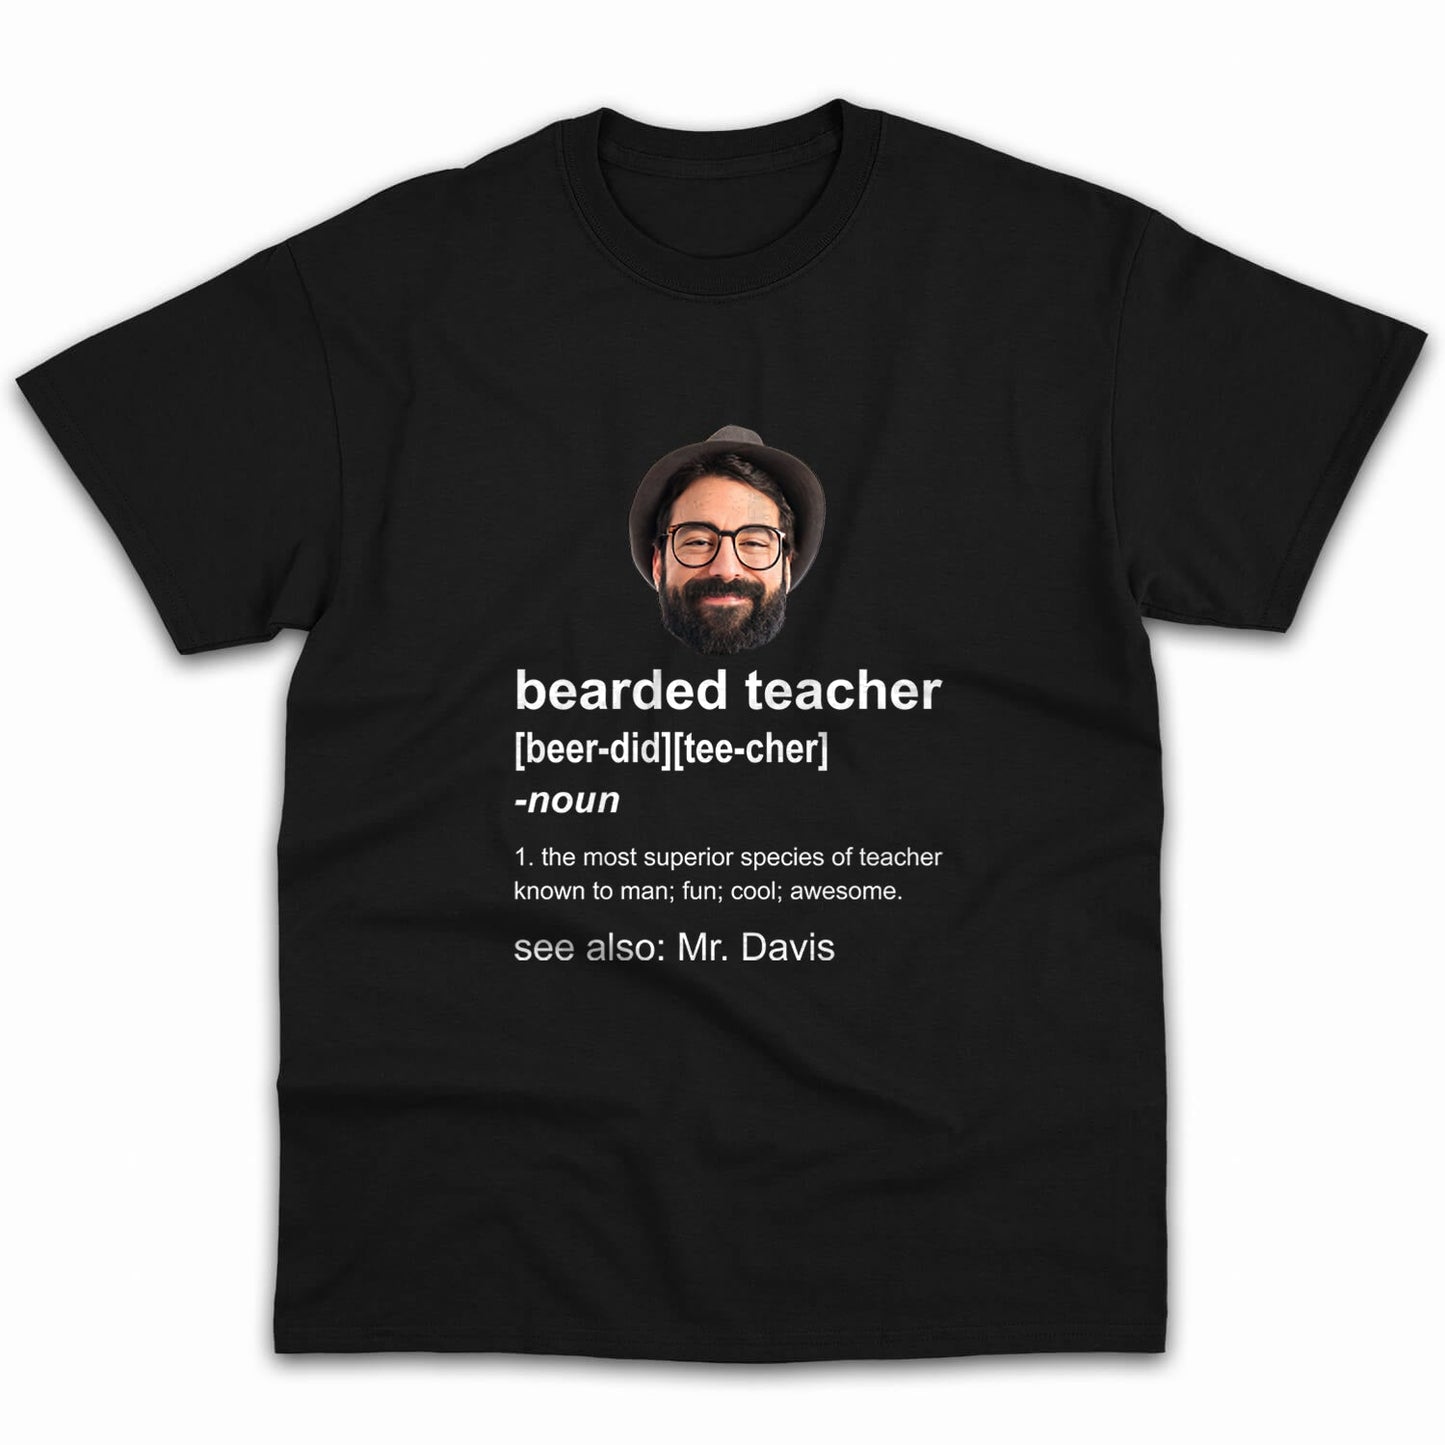 Bearded Teacher - Personalized Teacher's Day, Birthday or Christmas gift For Male Teacher - Custom Tshirt - MyMindfulGifts